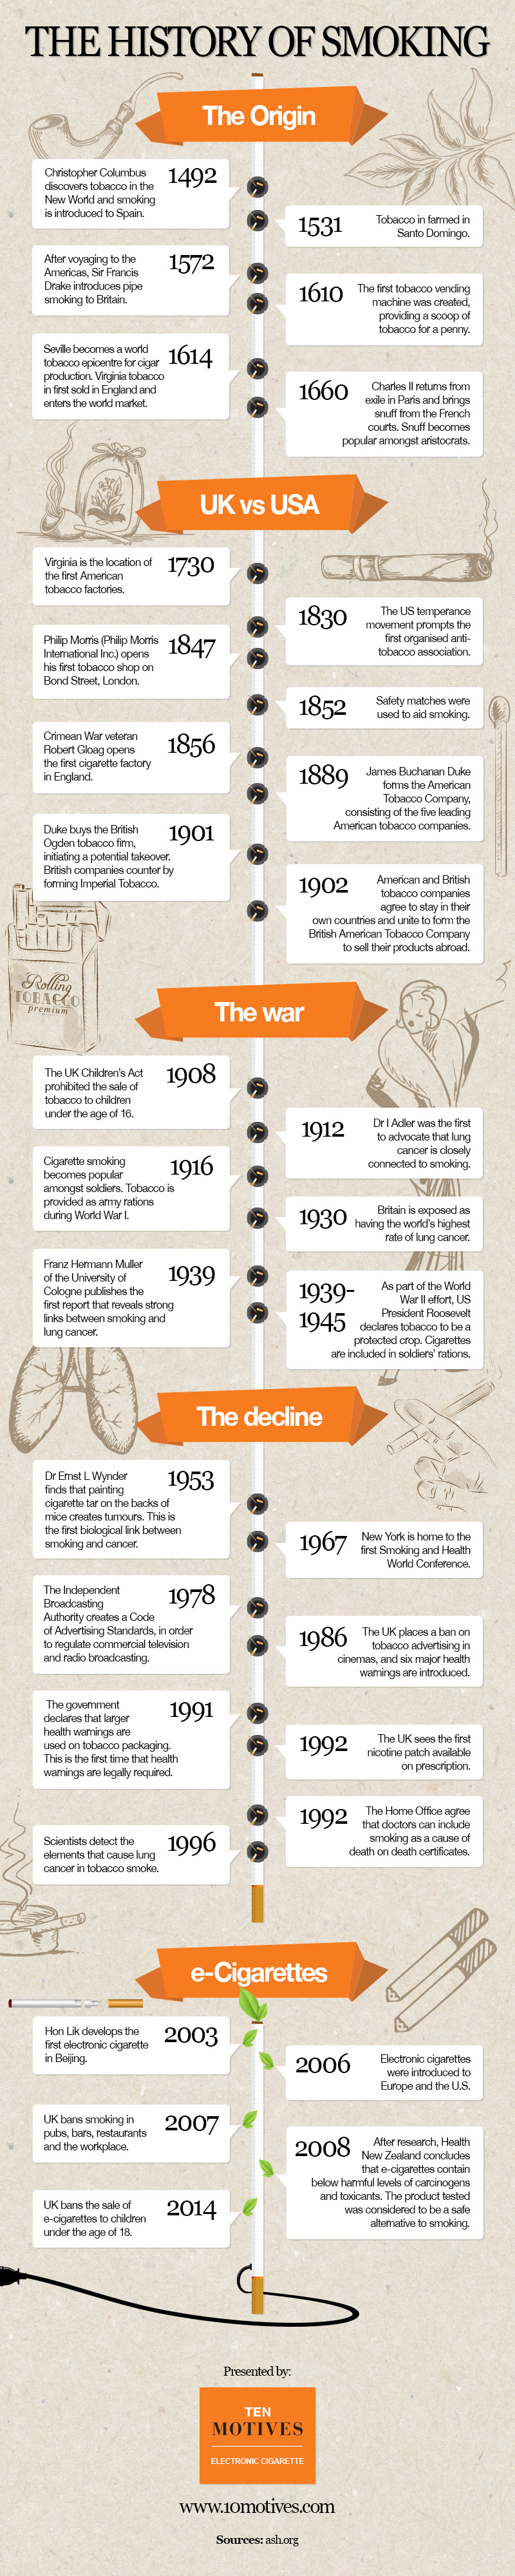 The History of Smoking